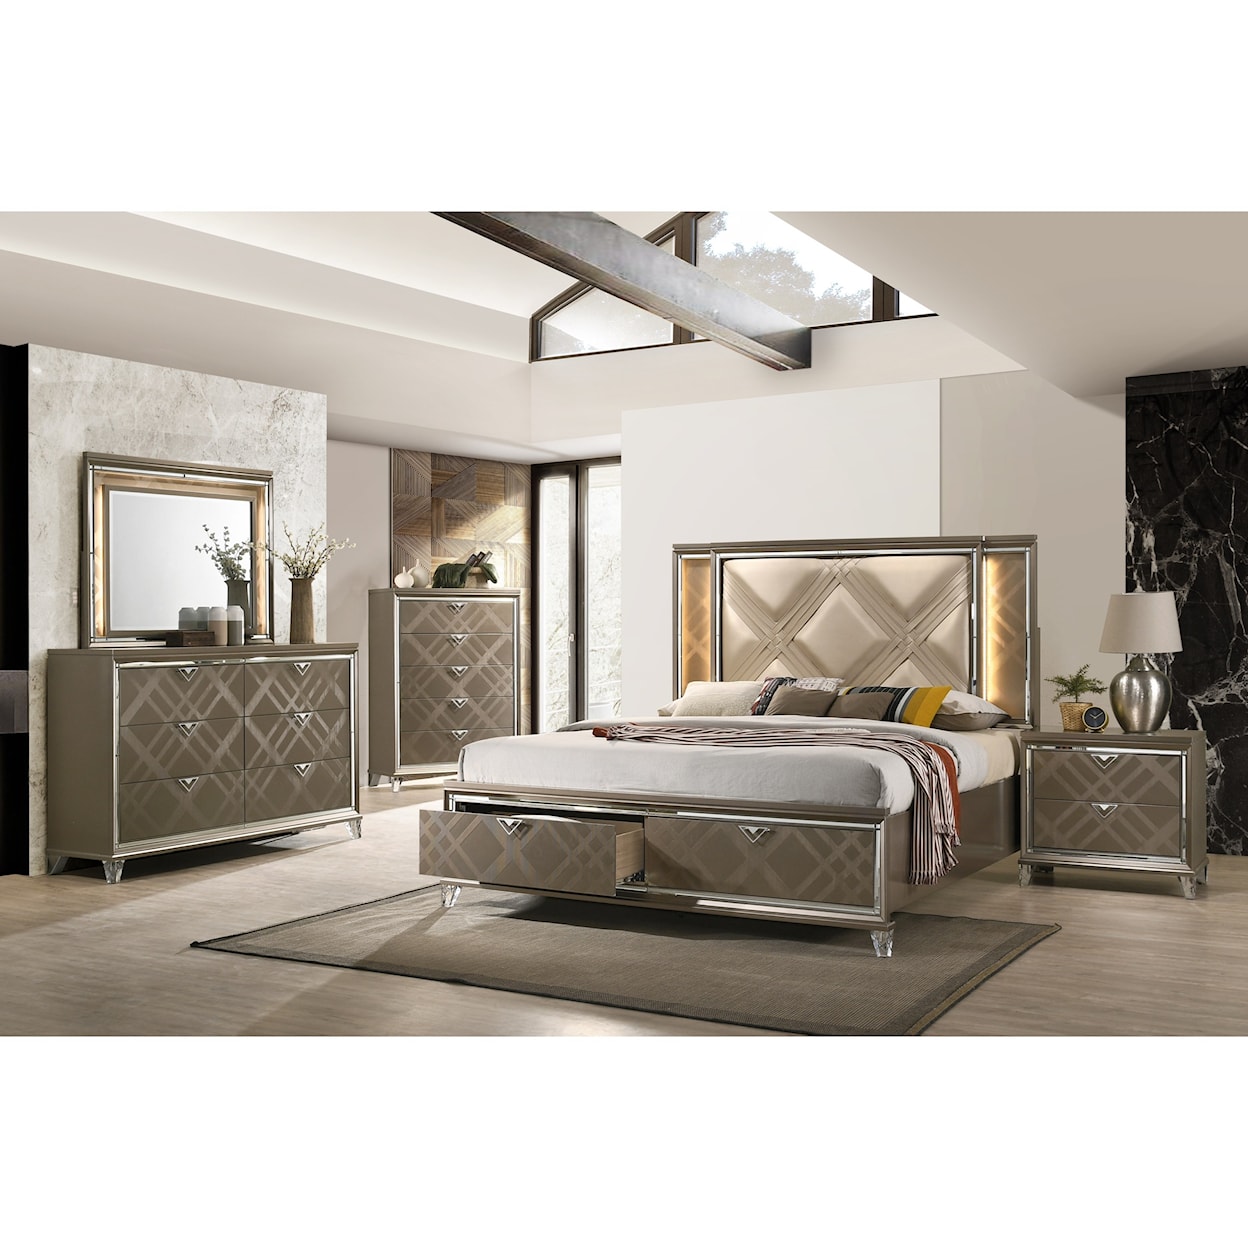 Acme Furniture Skylar 7pc King Bedroom Group